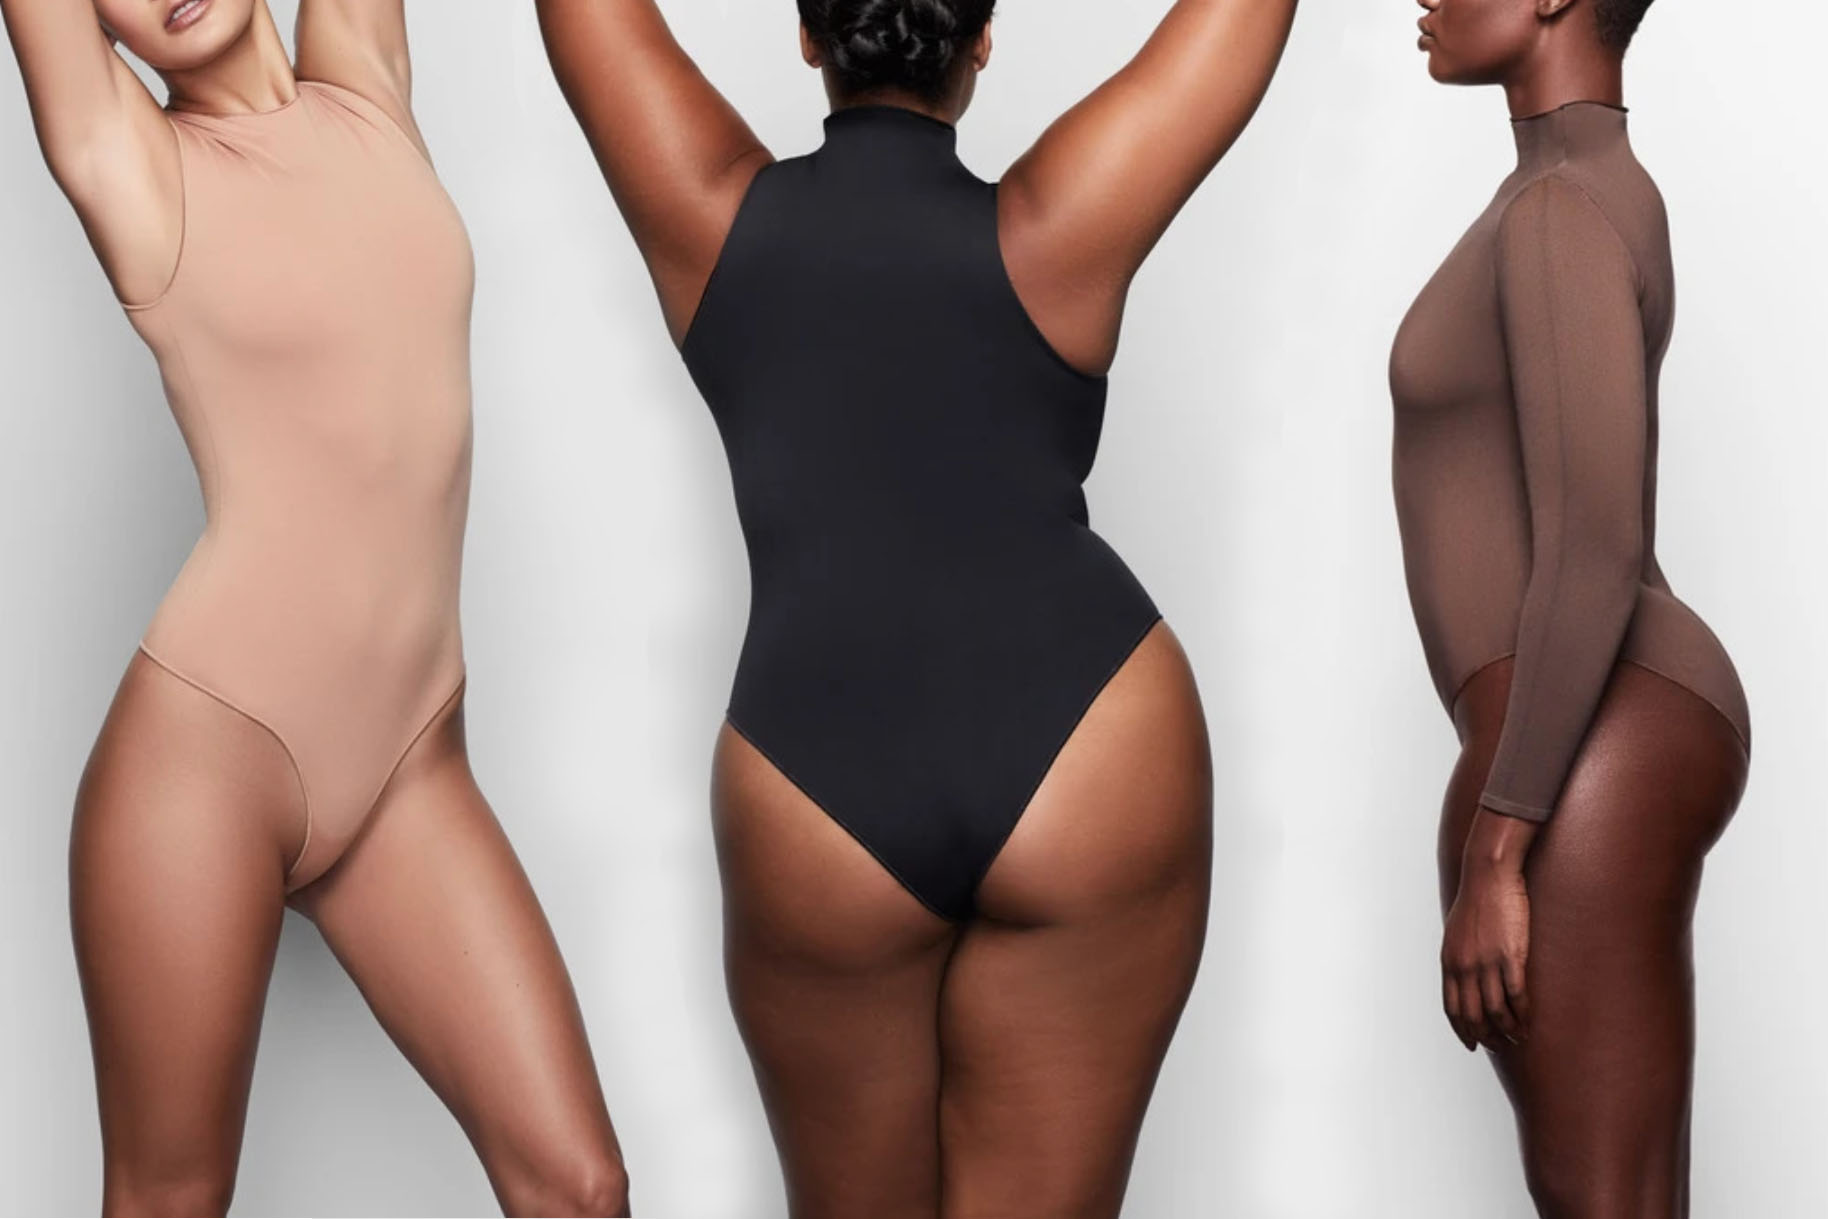 Kim Kardashian on X: Just dropped new @SKIMS Essential Bodysuits